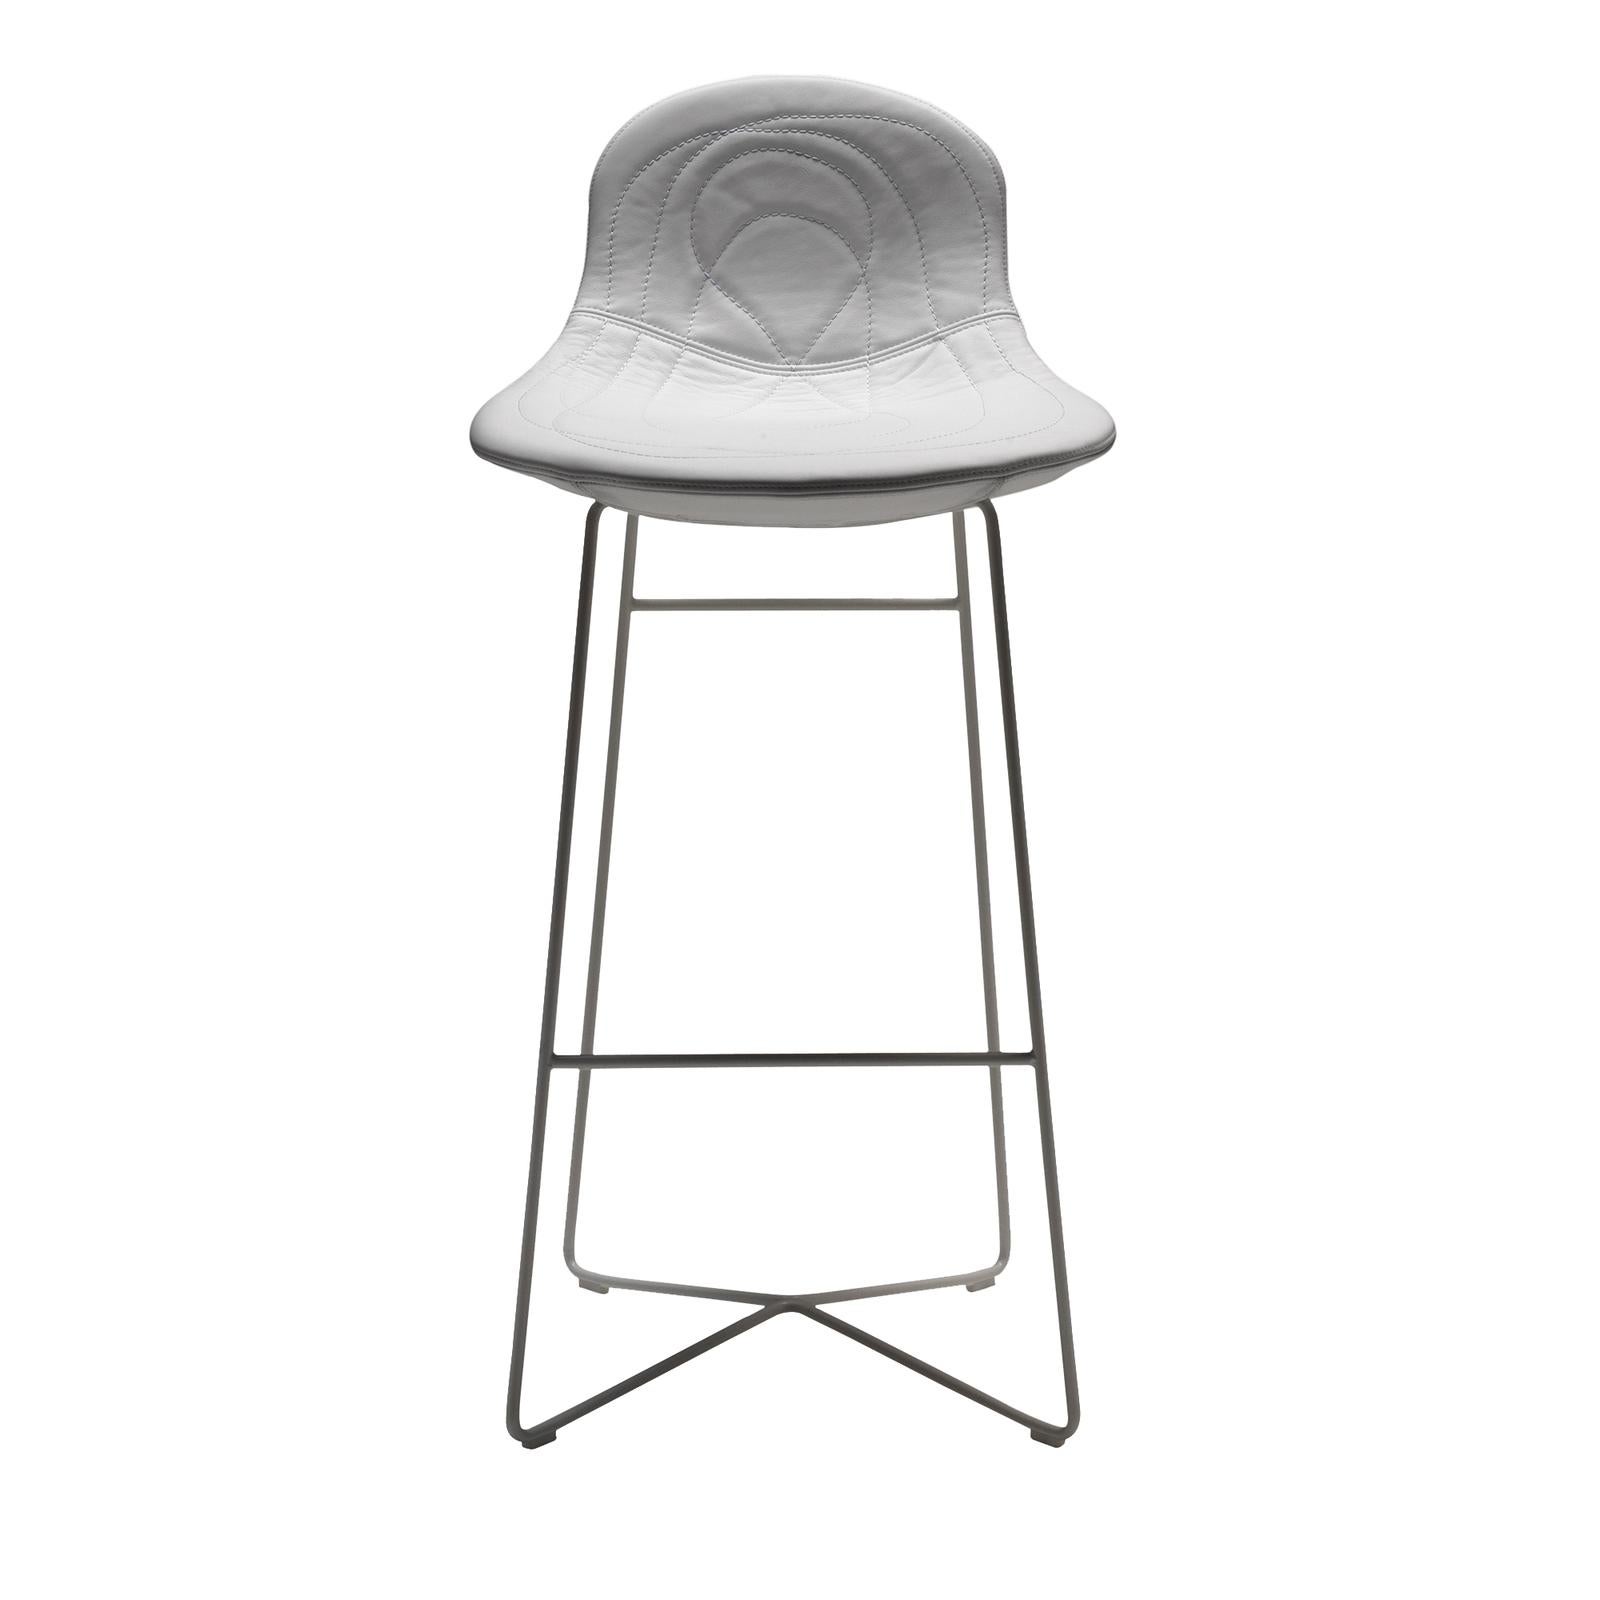 Customizable New Tacchini Doodle Chair Designed by Claesson Koivisto Rune 1